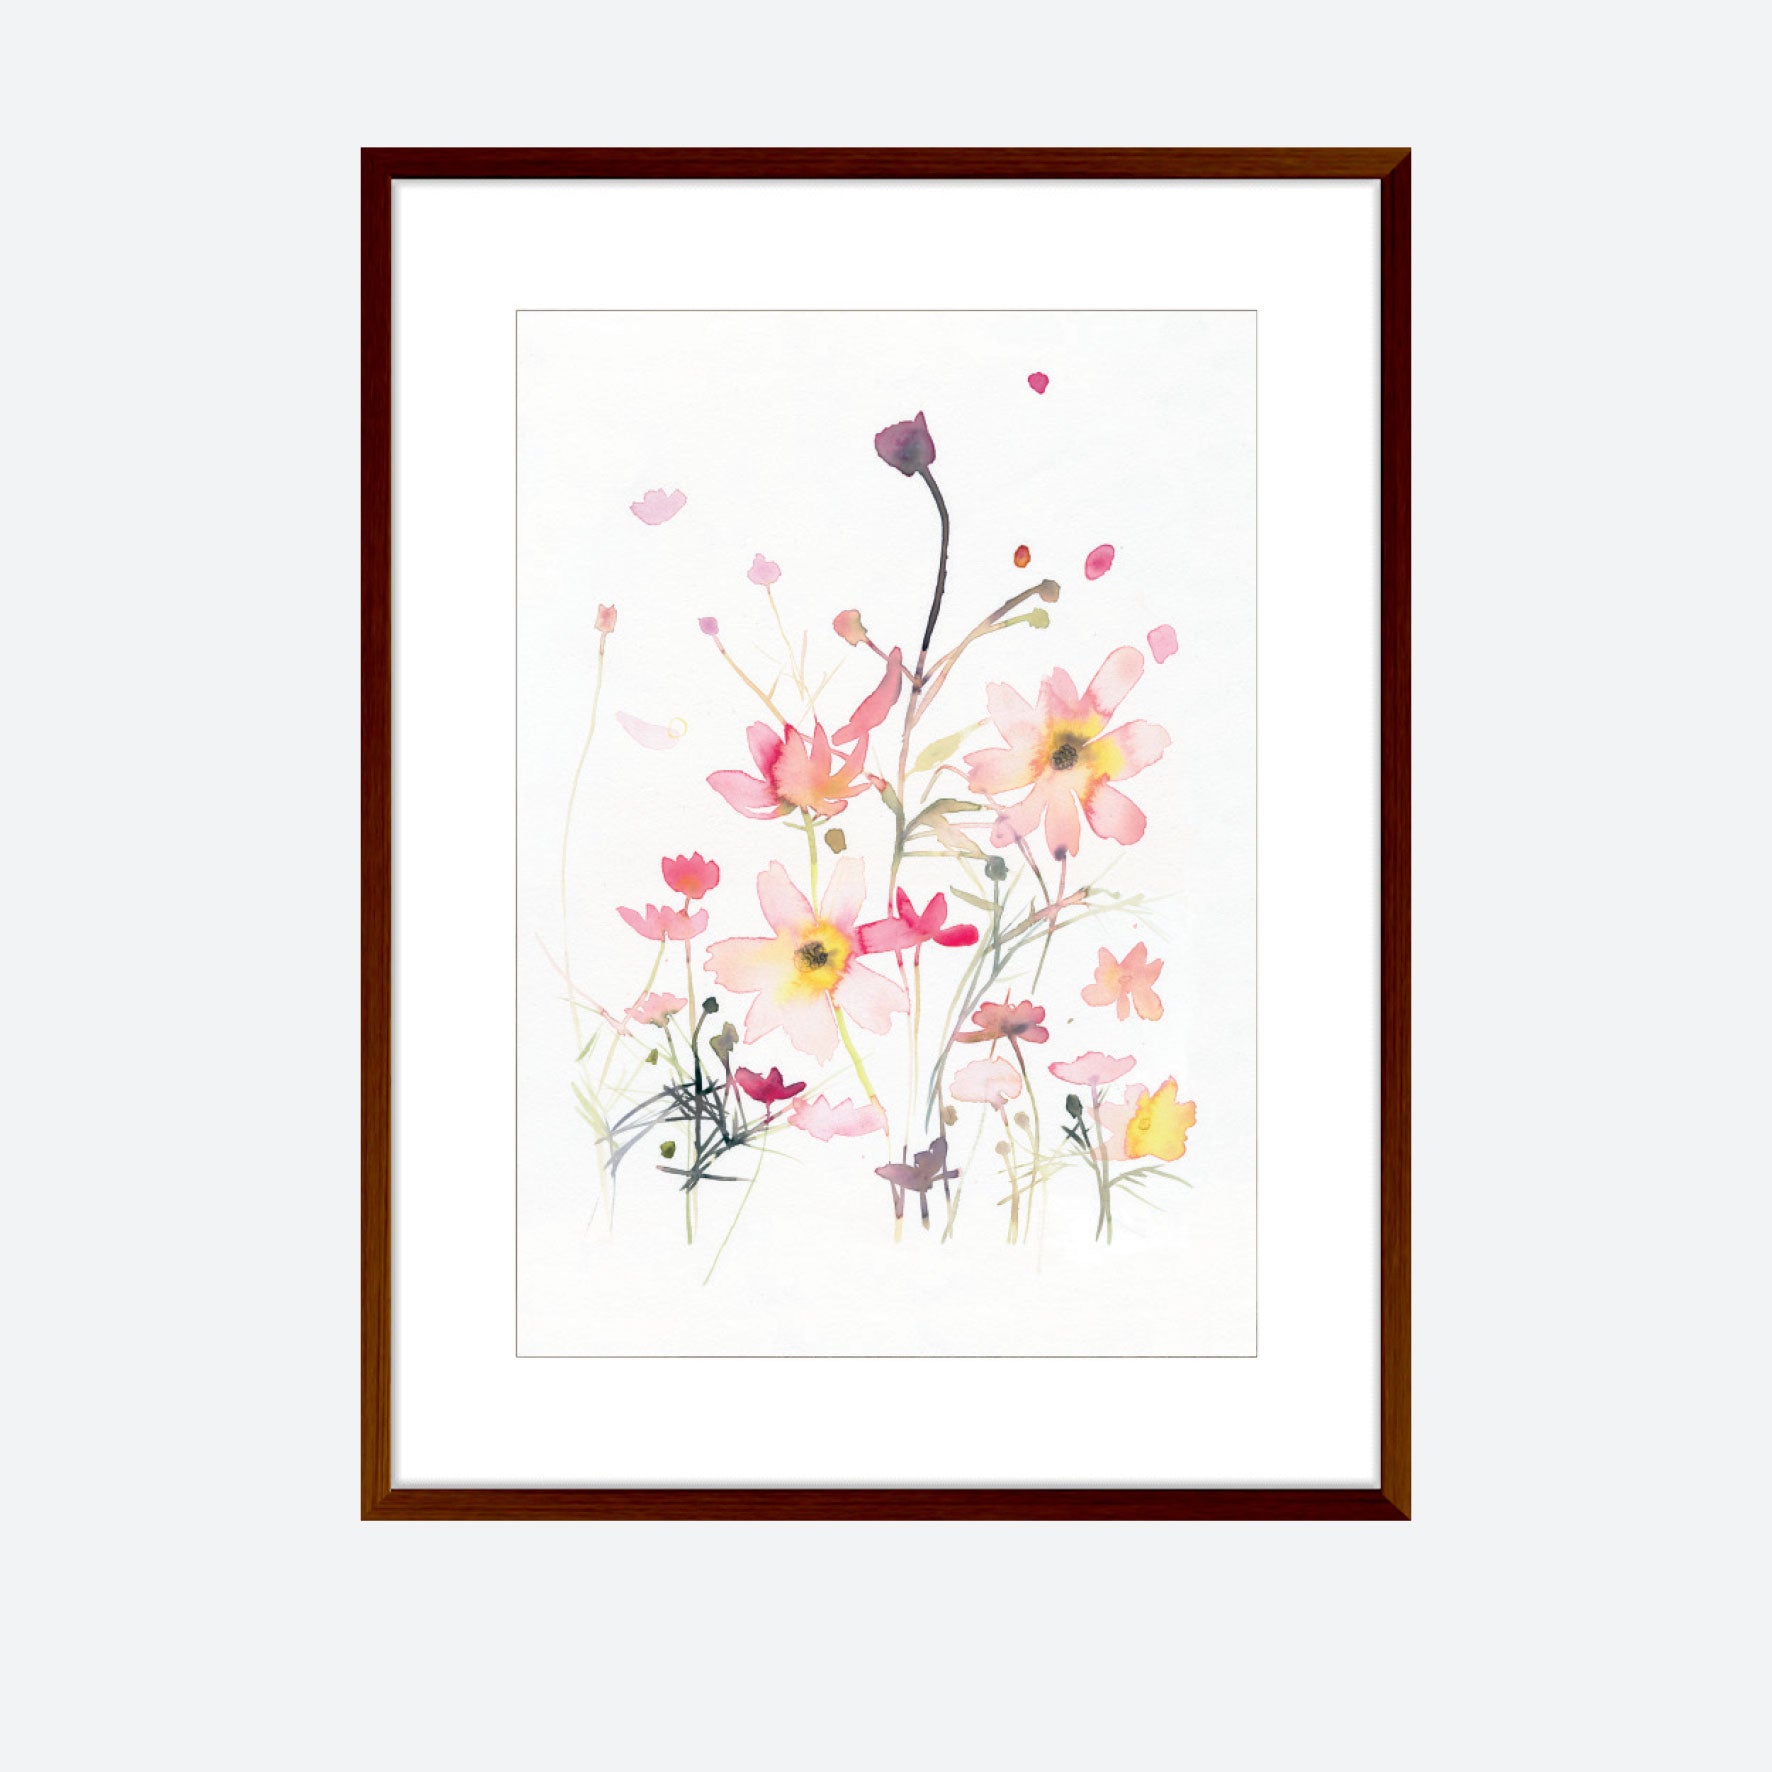 Toril Baekmark - Fine Art Prints - Flower Poster No.1